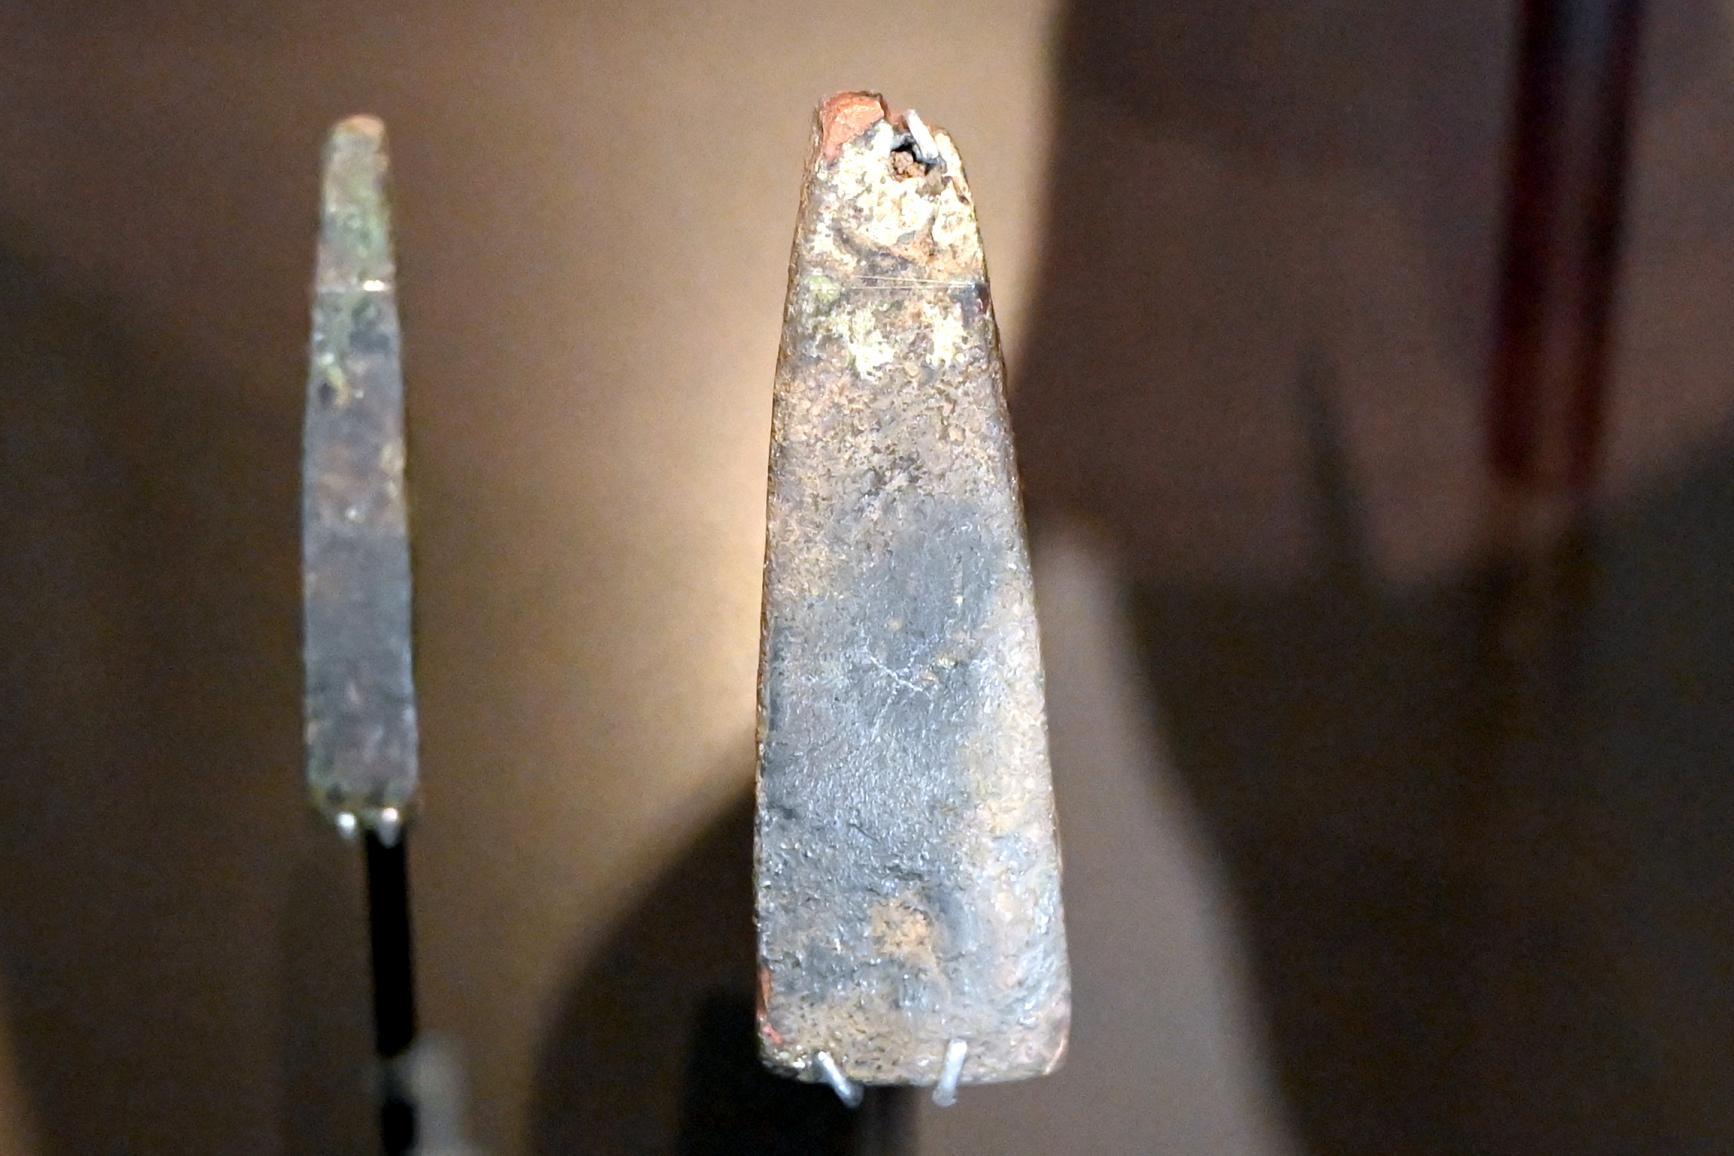 Kupferbeil, Neolithikum (Jungsteinzeit), 5500 - 1700 v. Chr., 4000 - 3600 v. Chr., Bild 1/3